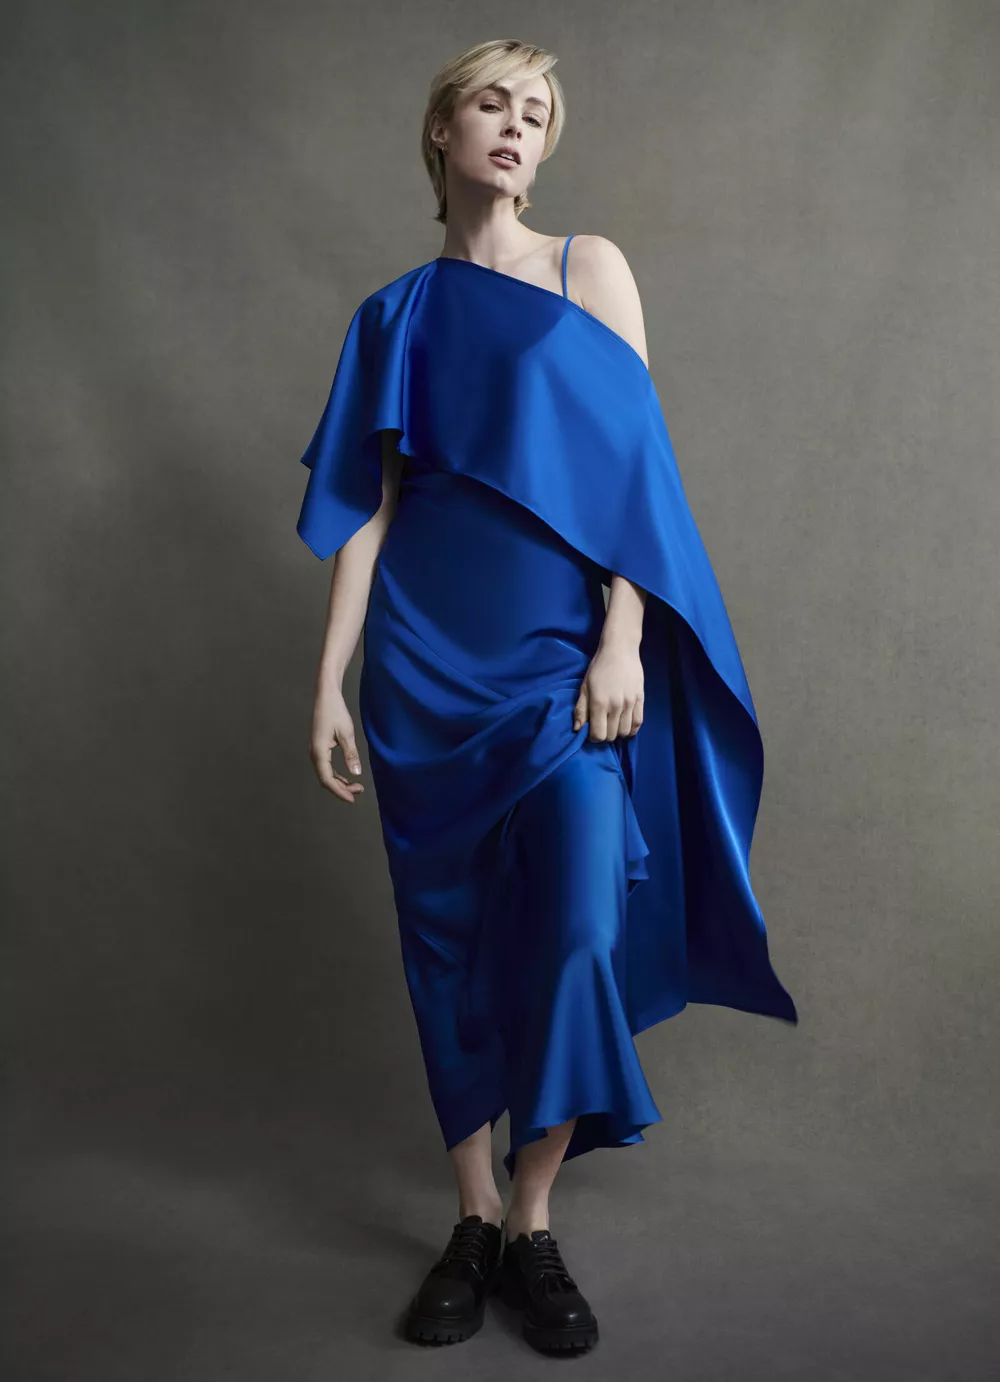 Поп-арт, спорт и коллекция Кейт Фелан: дайджест fashion-новостей